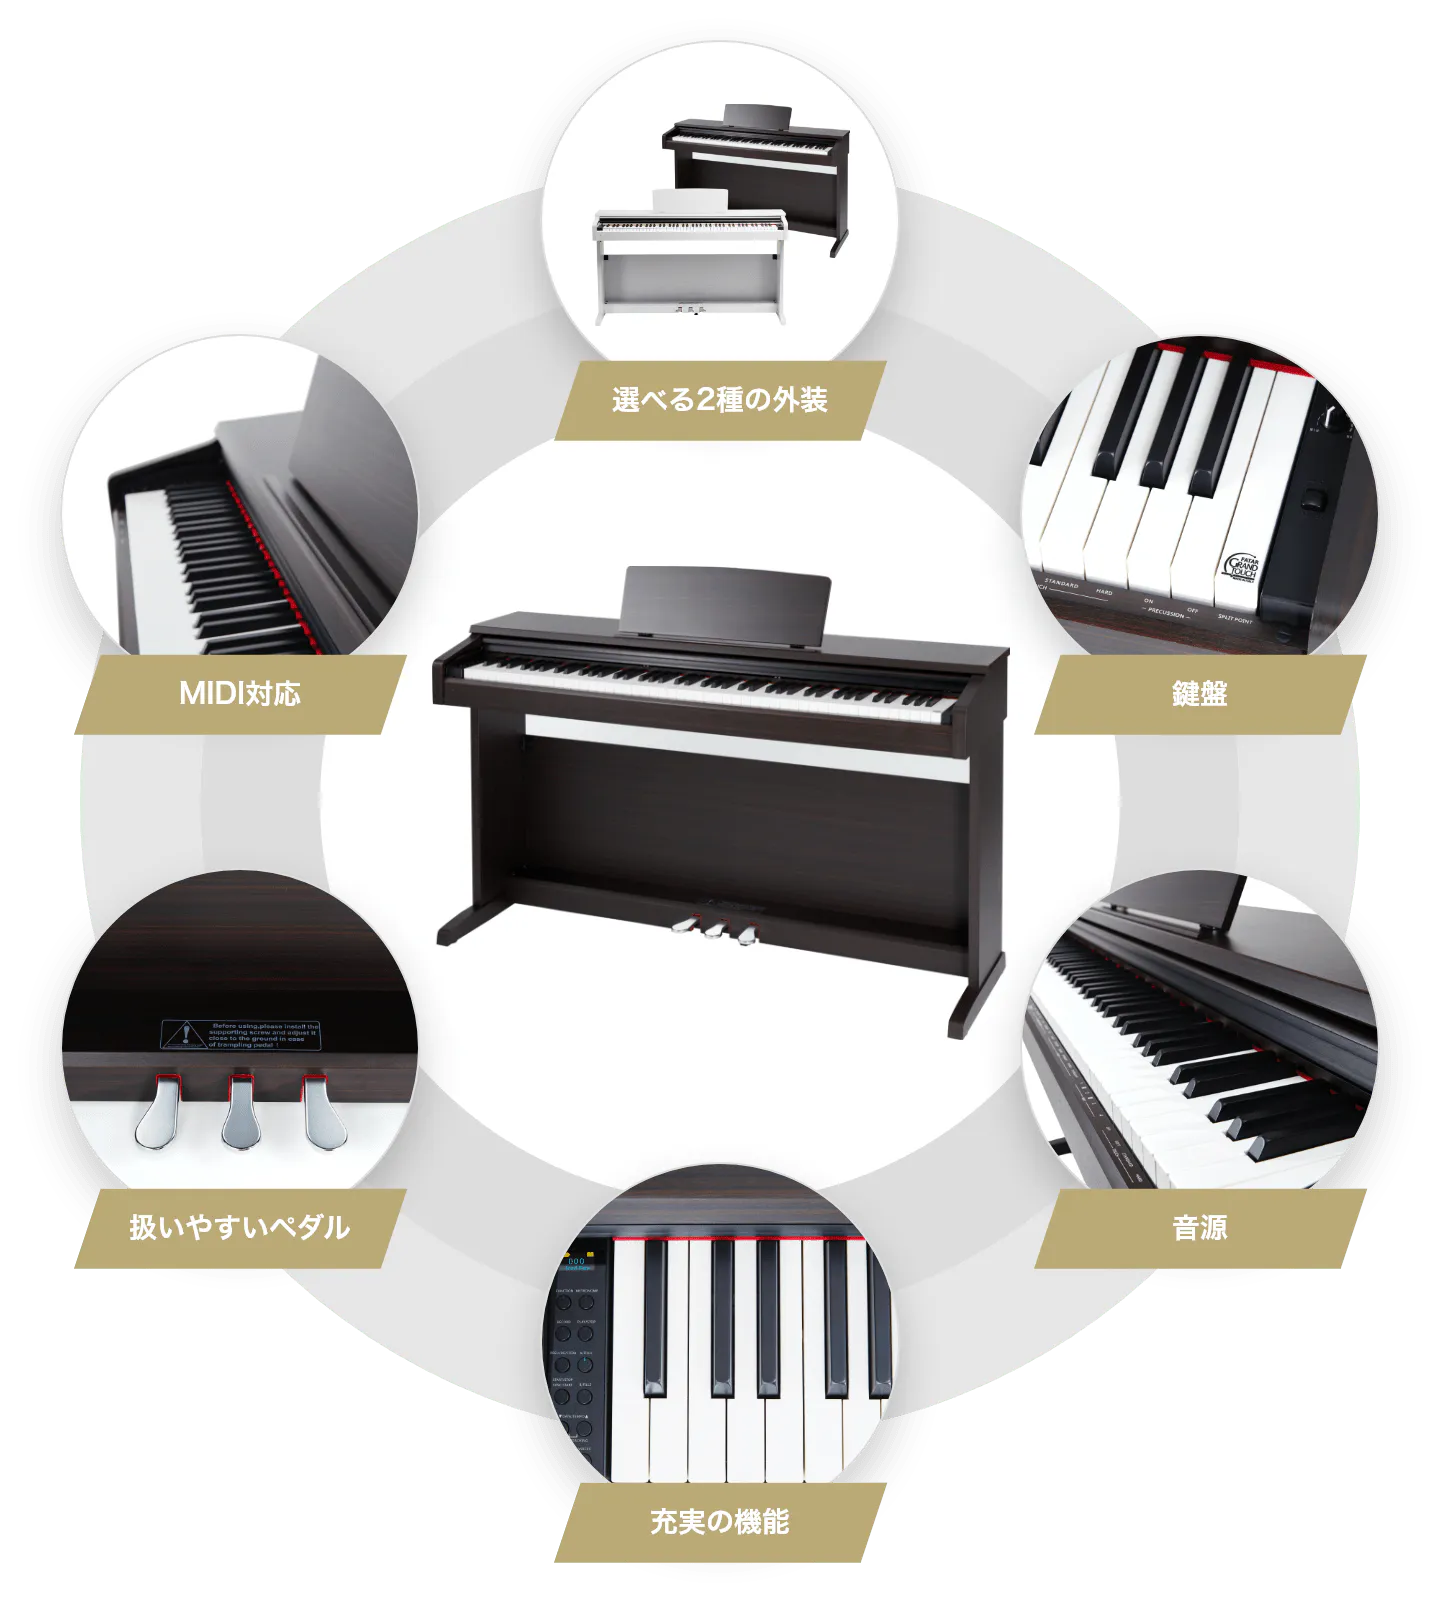 MIDI対応、選べる2種の外装、鍵盤、音源、充実の機能、扱いやすいペダル